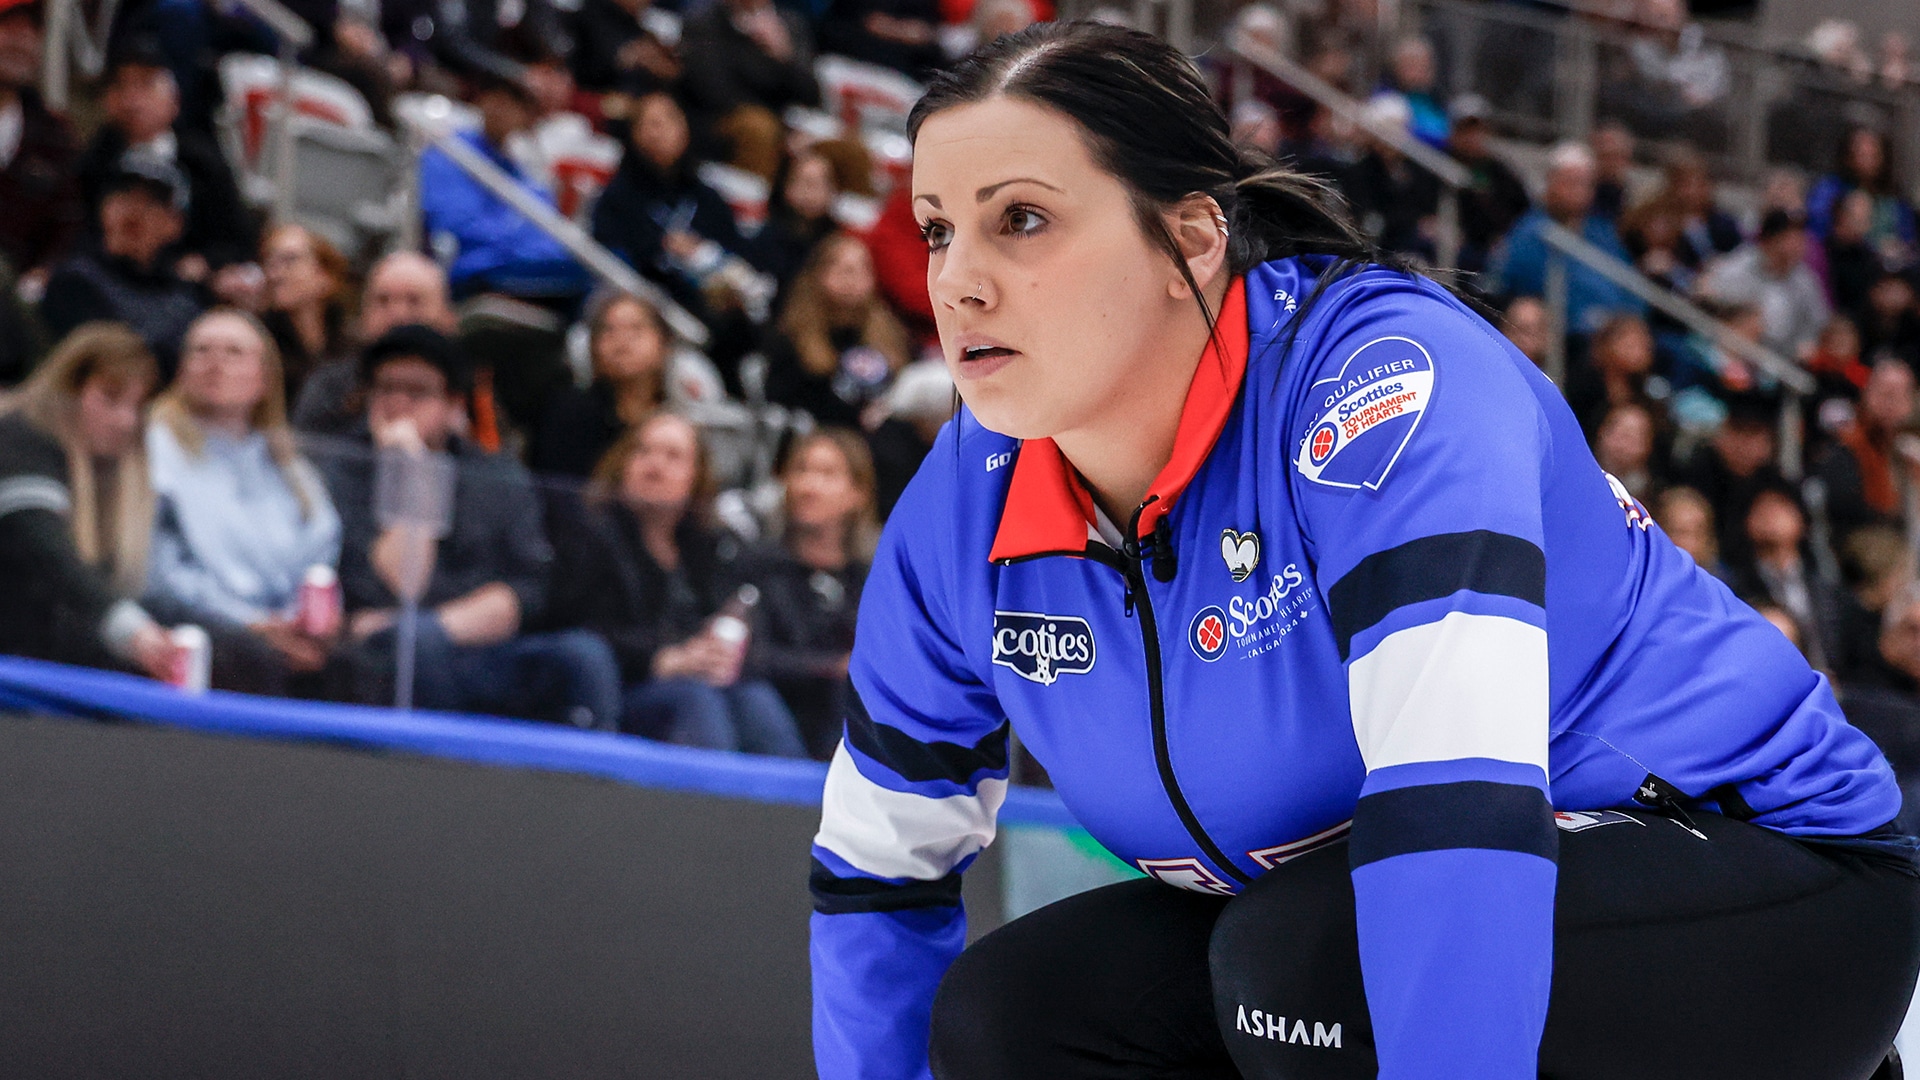 Scotties: Einarson wins 4th straight women's curling title